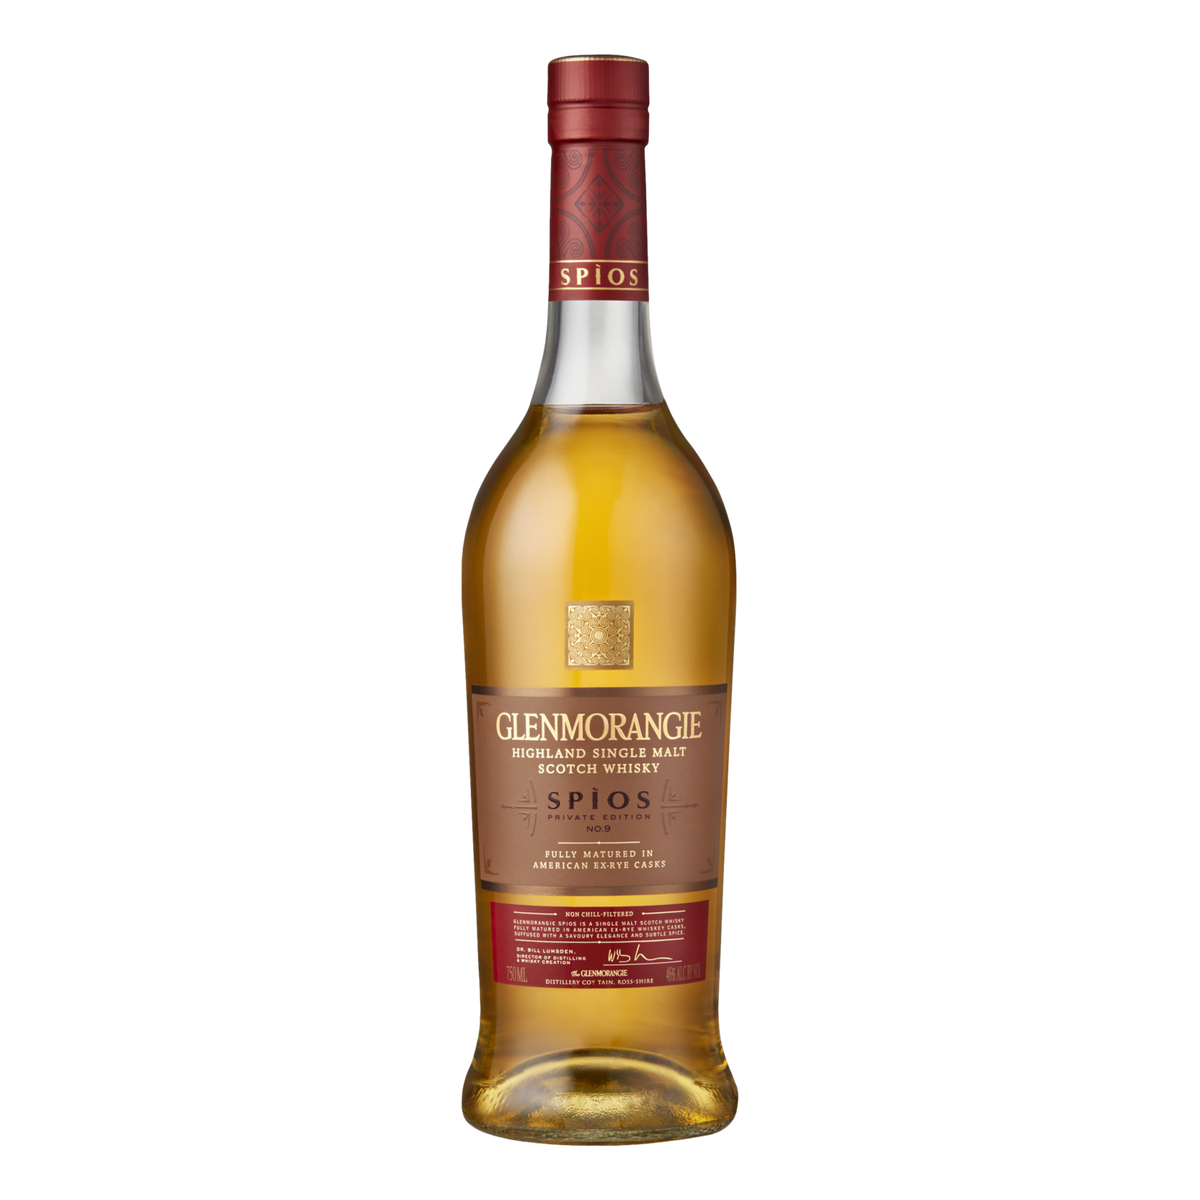 Glenmorangie Original Single Malt Scotch Whisky Spios 700ml - Limited Edition